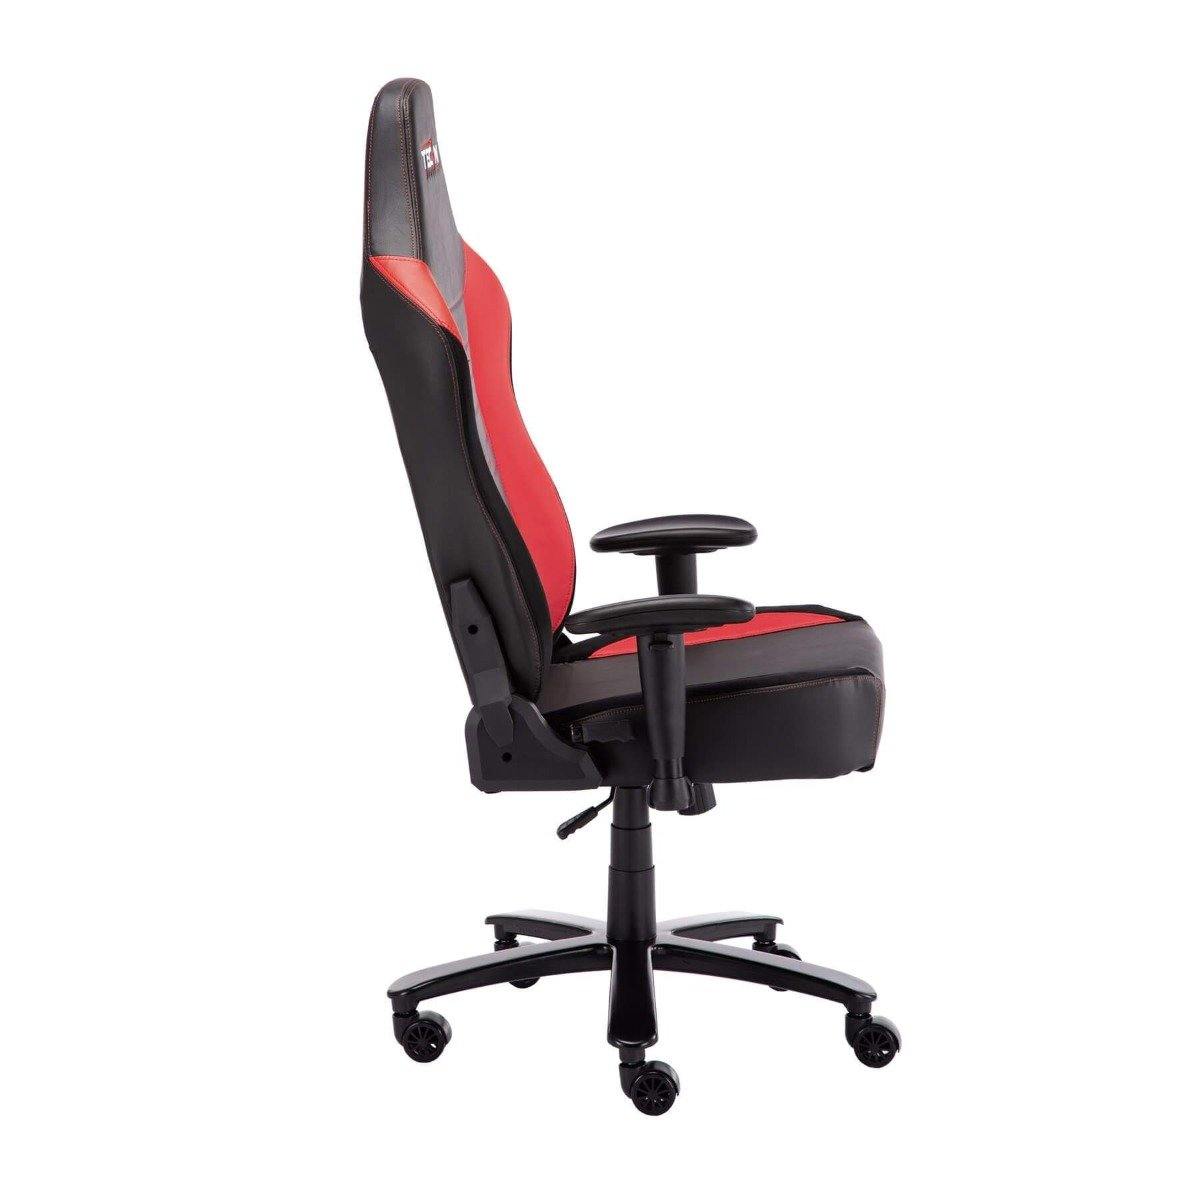 GameRider XXLR Gaming Chair, Red